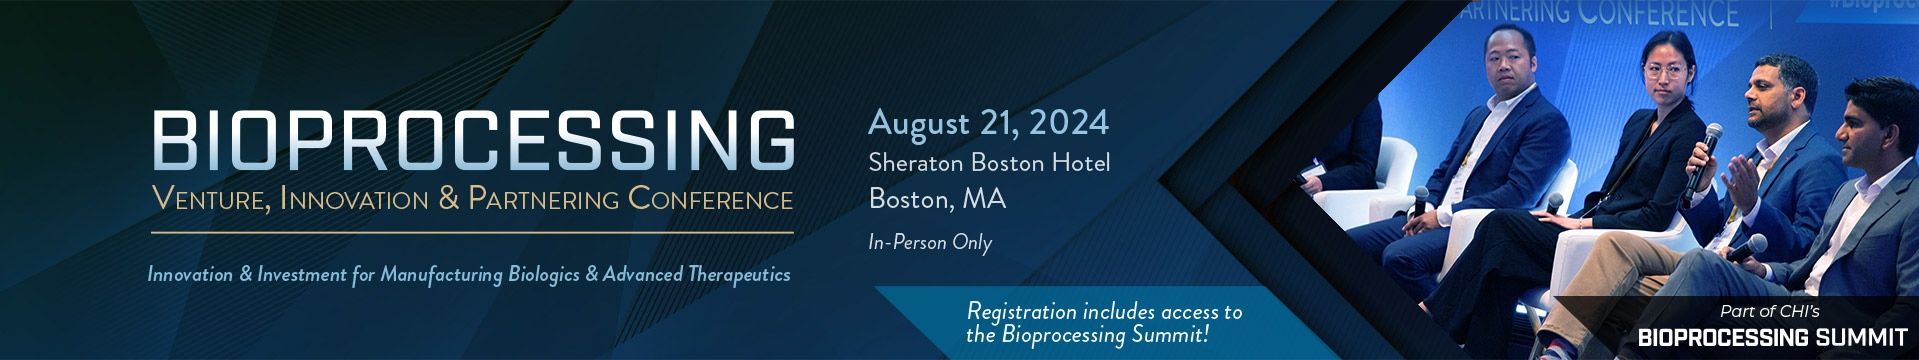 BioProcessing Summit  Partnering: Venture, Innovation, and Partnering